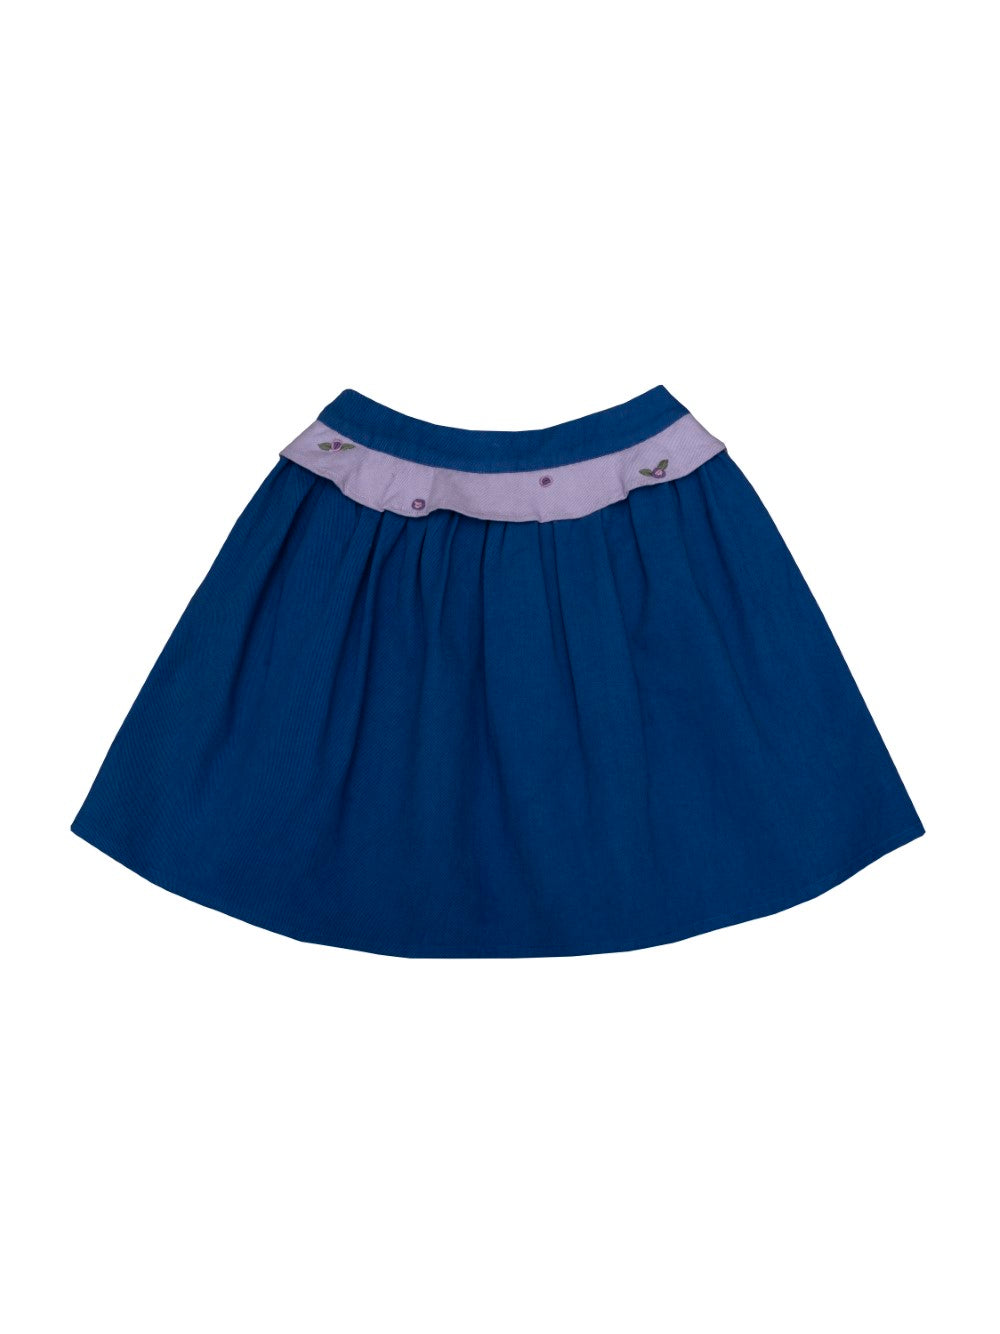 Peplum Embroidered Skirt